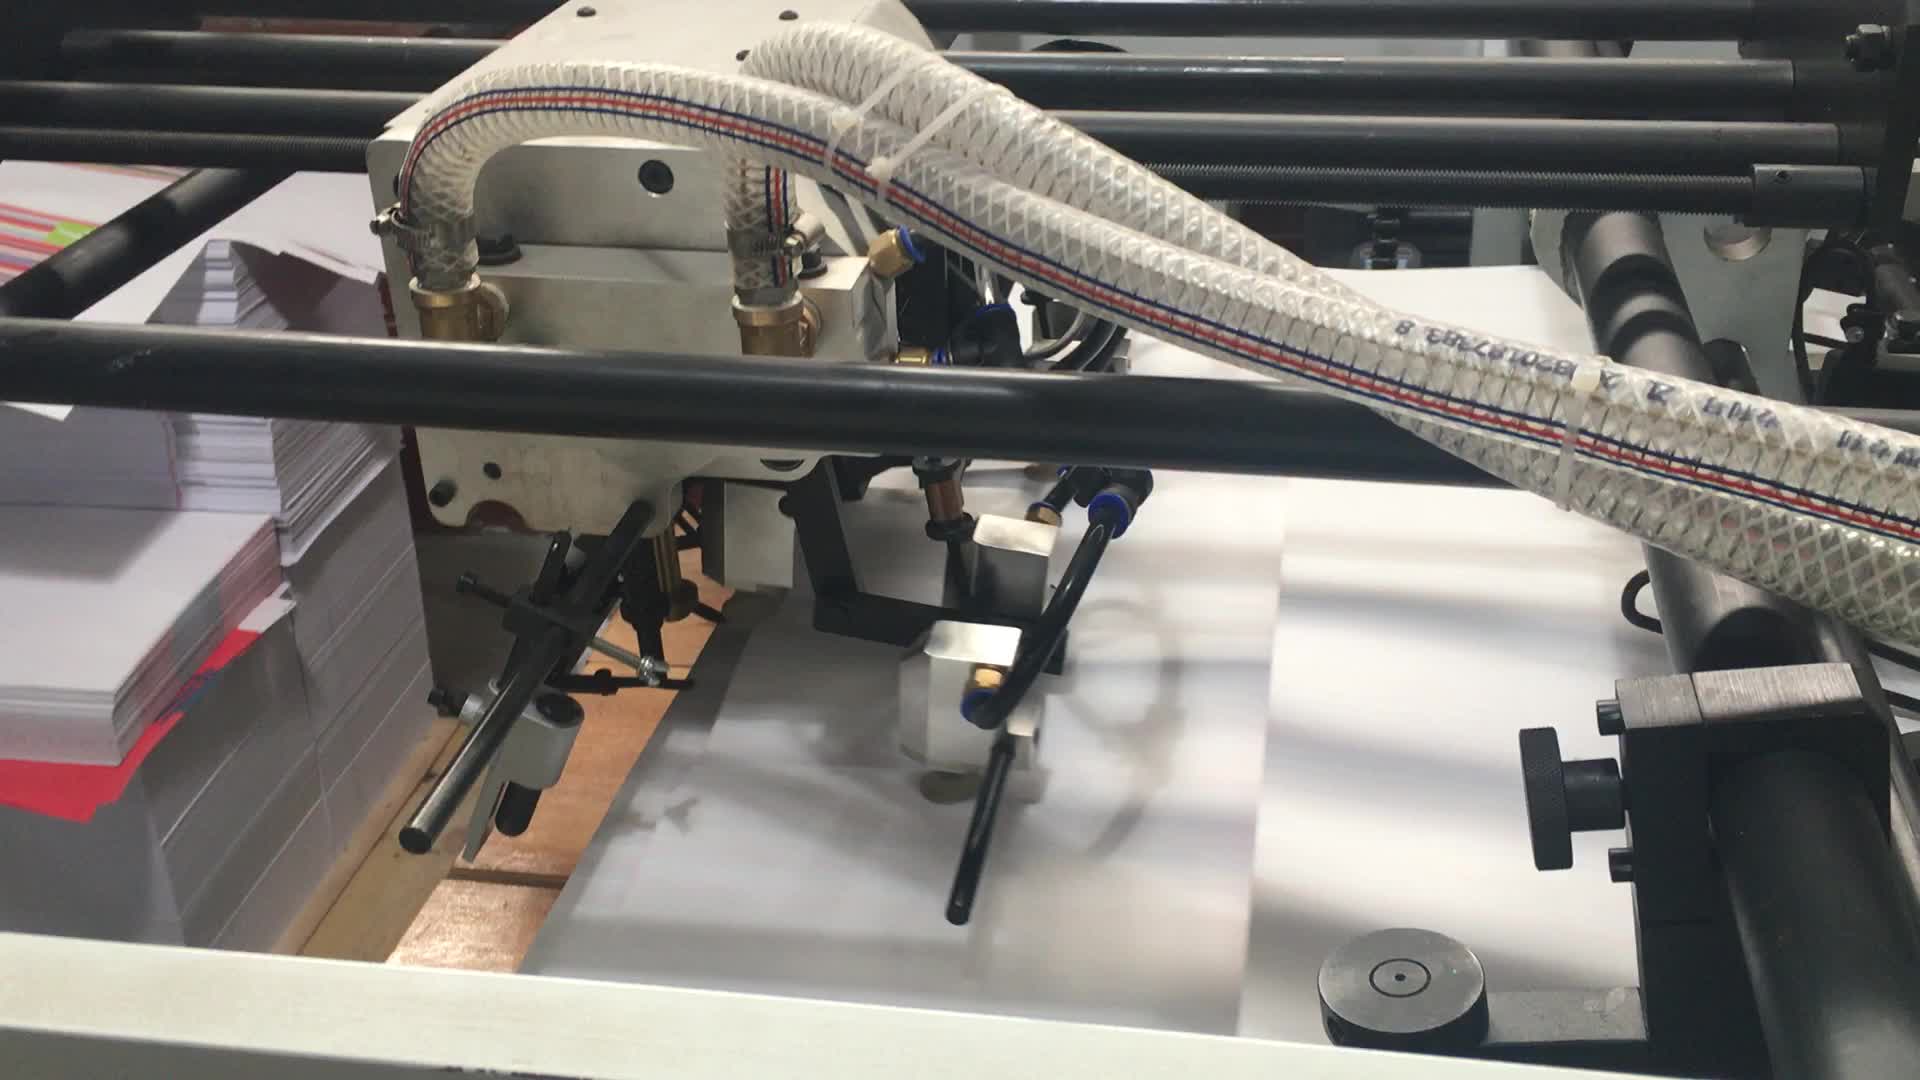 Sheet fed bag making machine-with handles